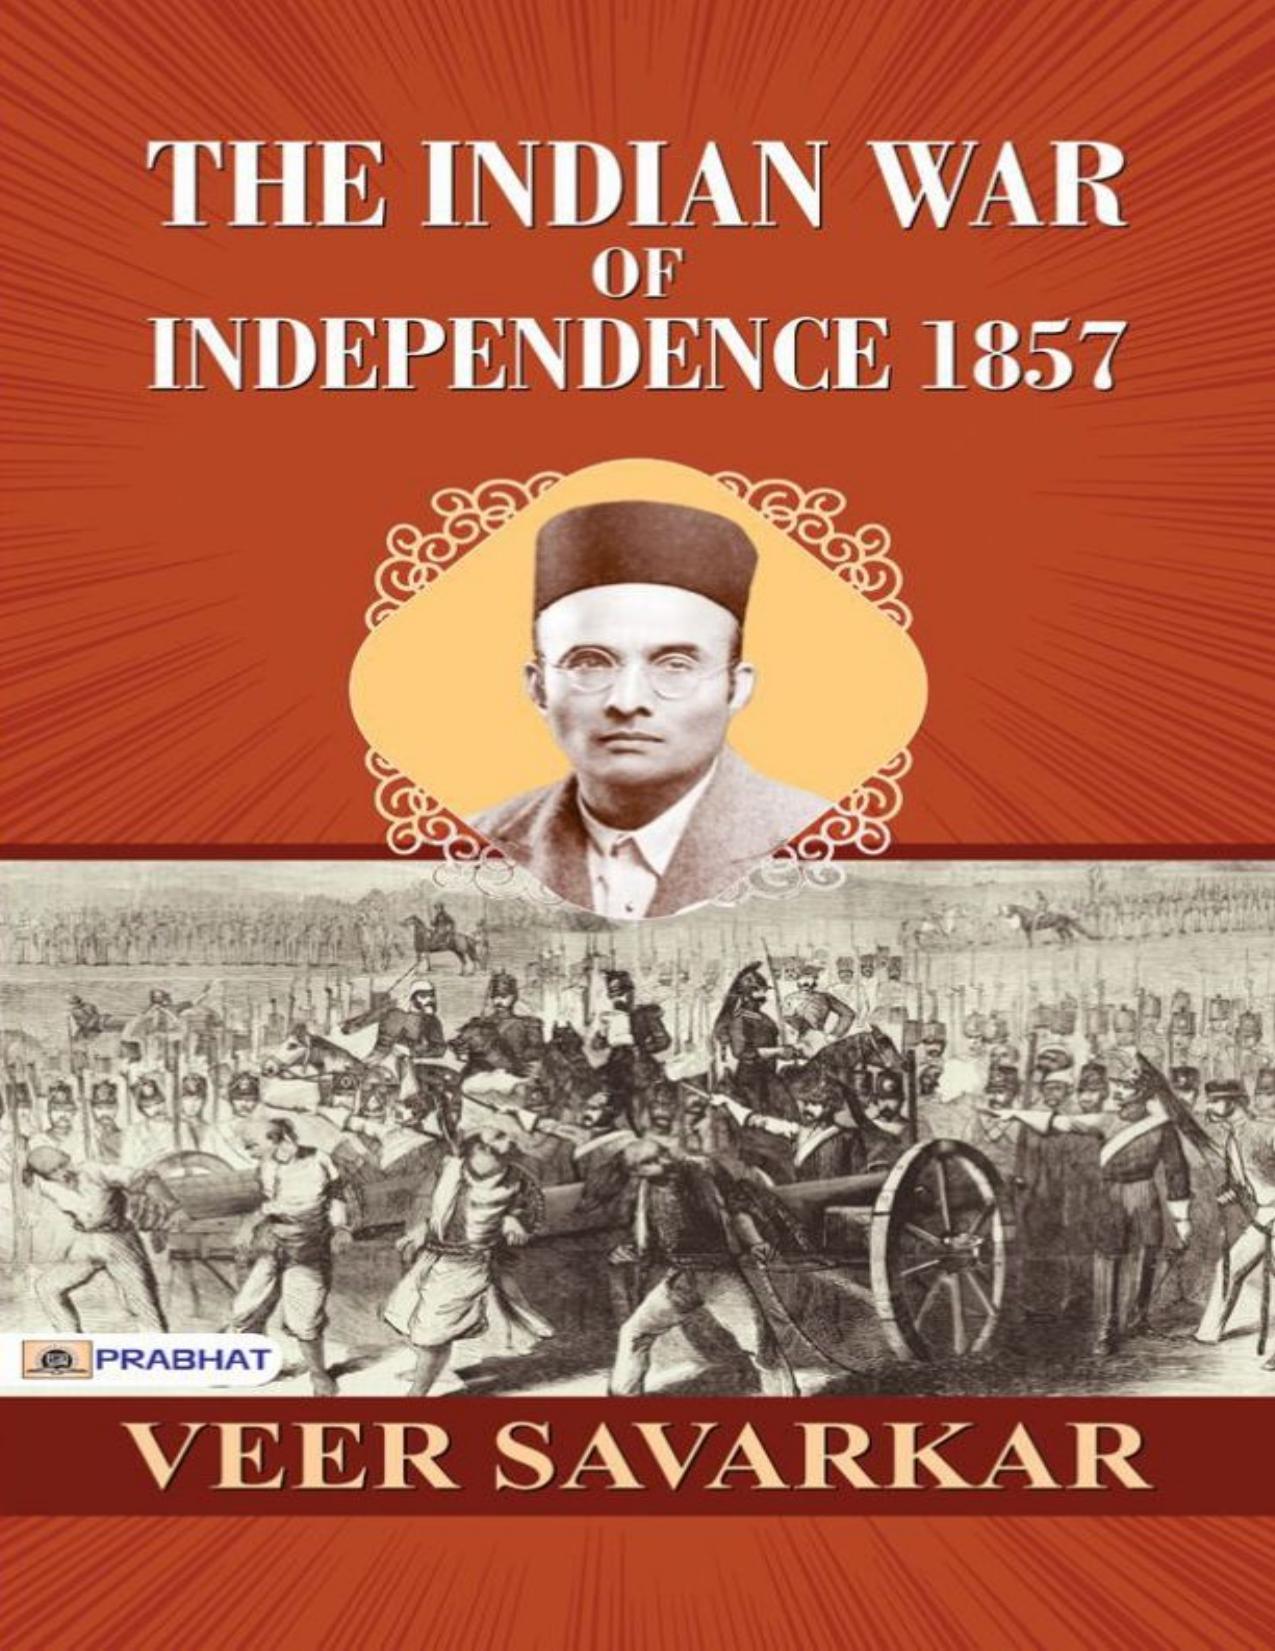 The Indian War of Independence of 1857 by Veer Savarkar